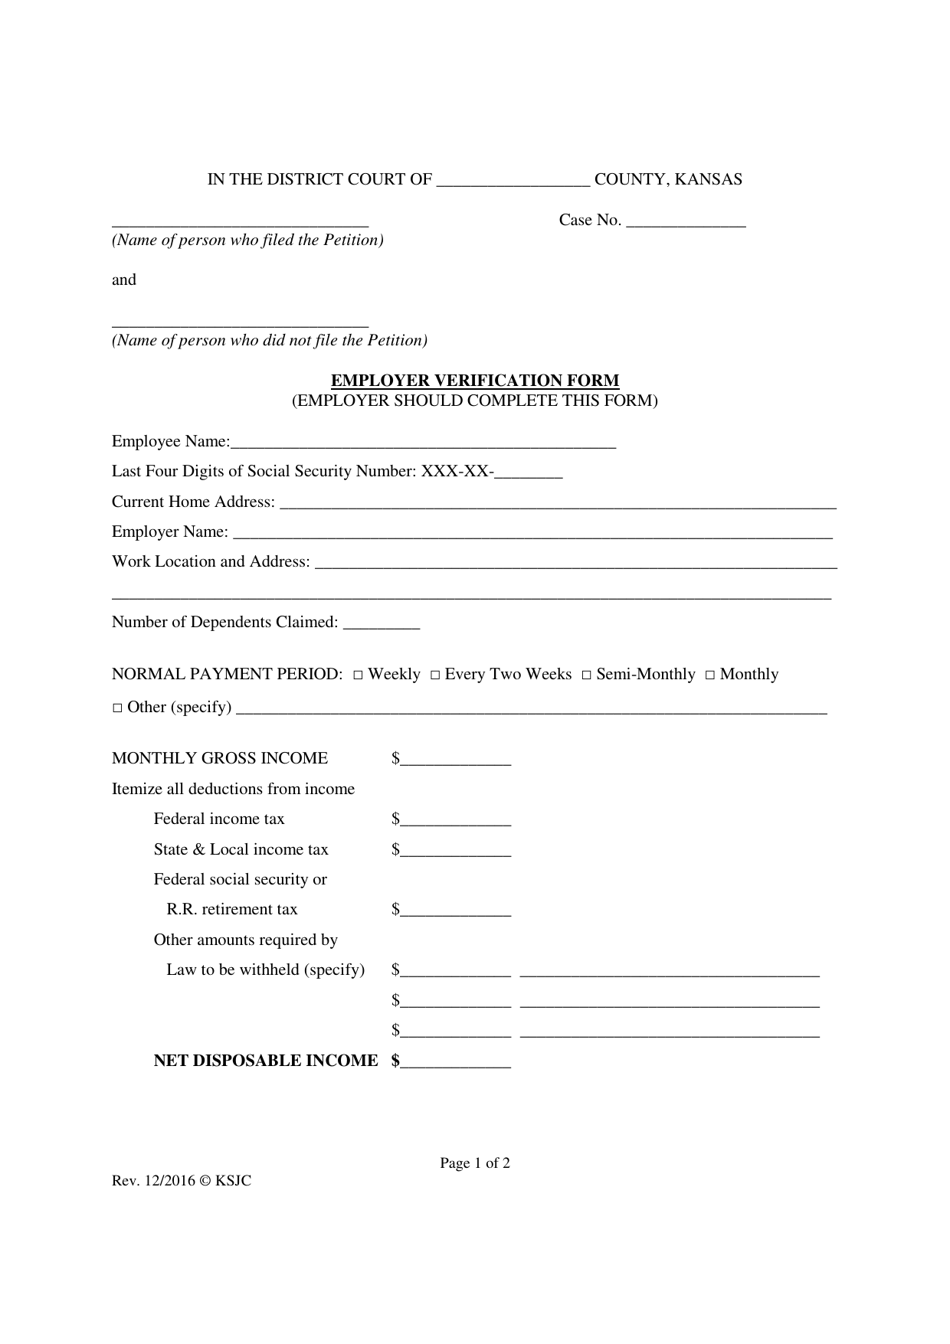 Employer Verification Form - Kansas, Page 1